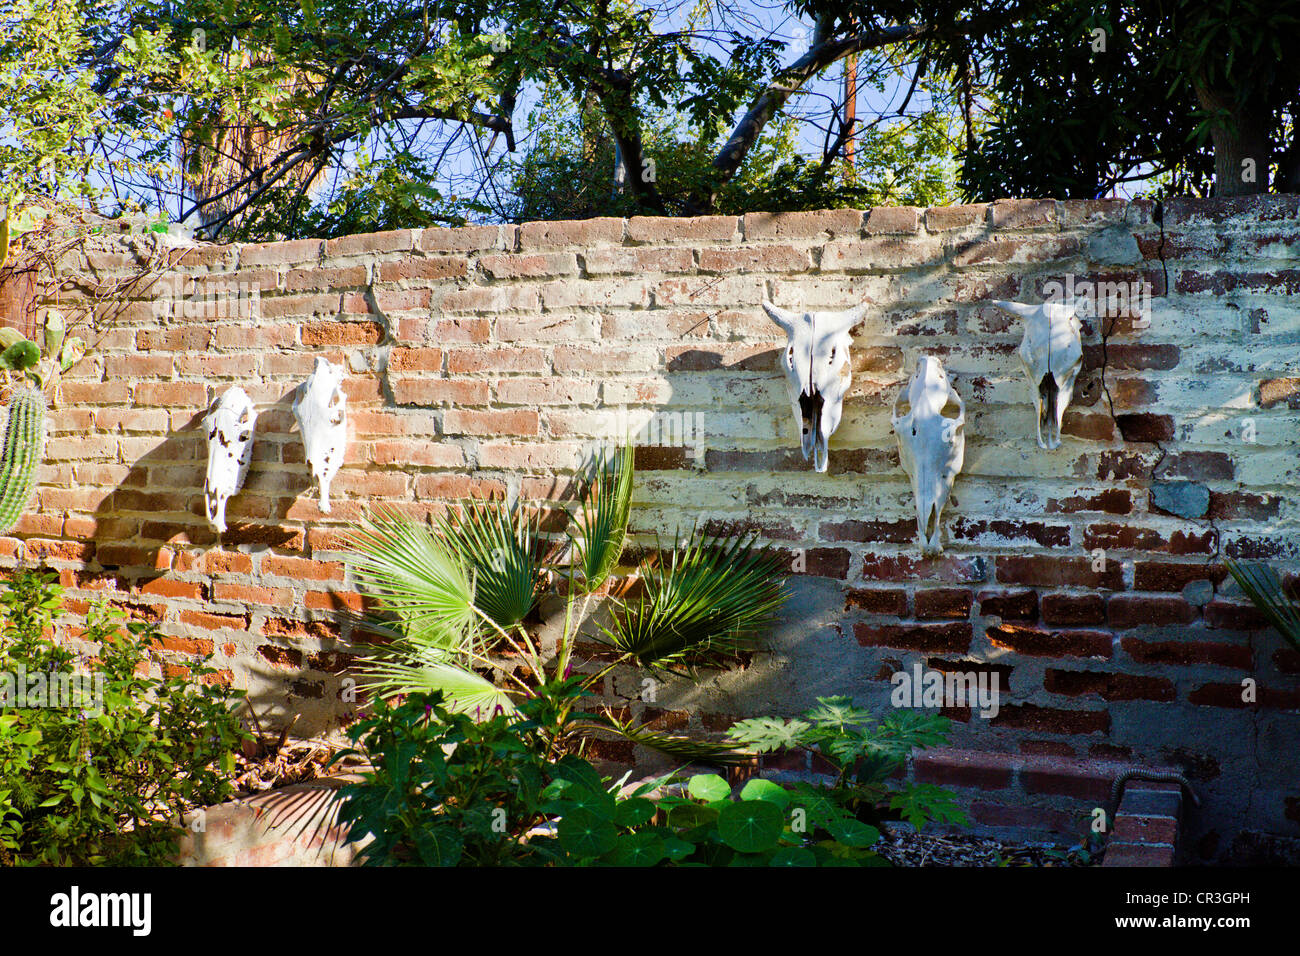 Steer skulls on brick wall in 'Todos Santos' Baja Mexico Stock Photo